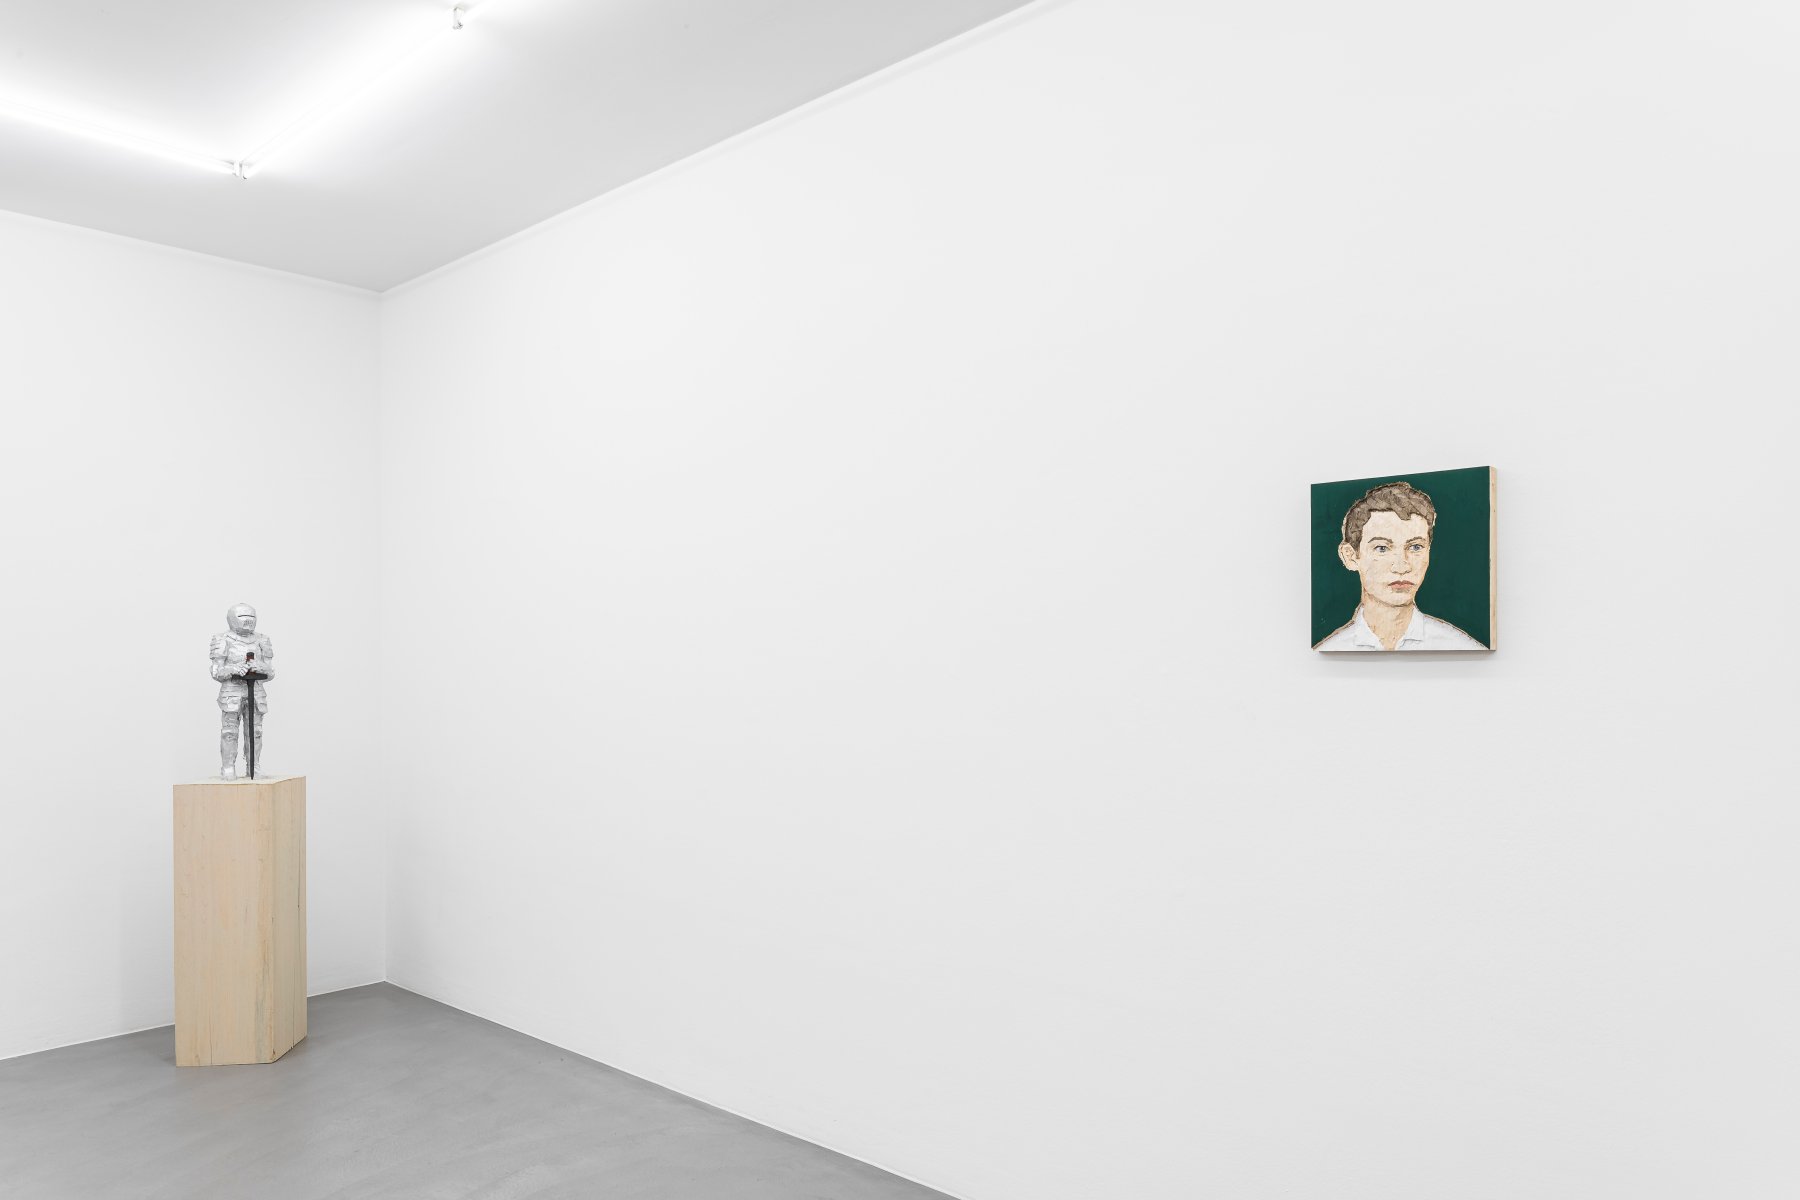 Installation image for Stephan Balkenhol, at Mai 36 Galerie